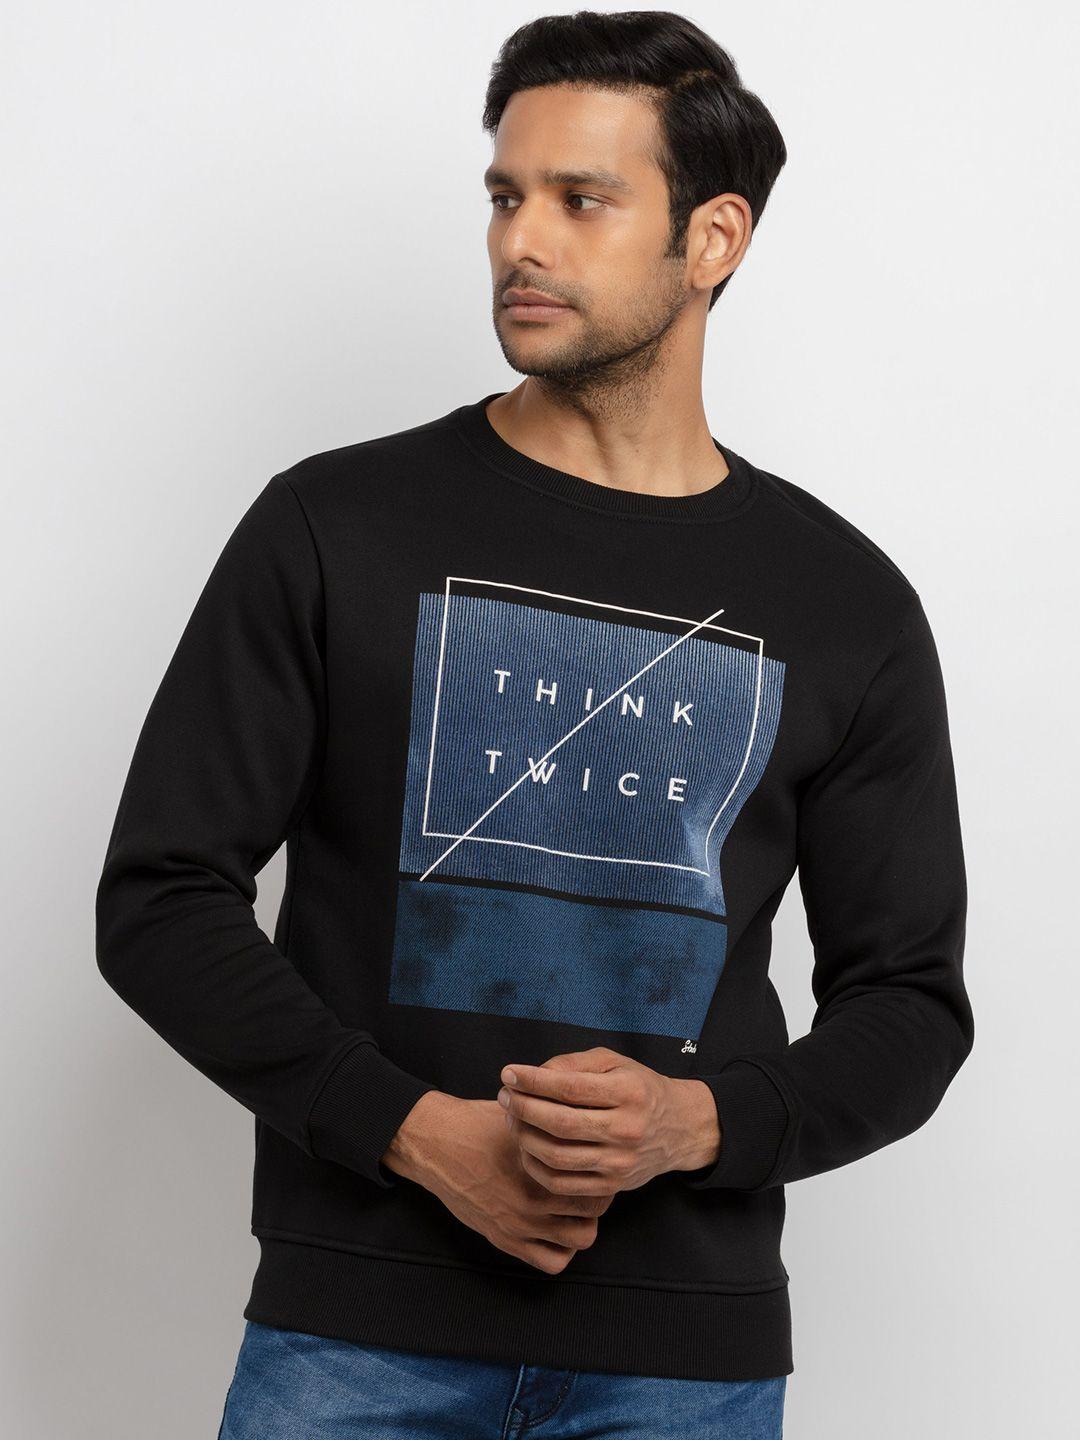 status quo men black printed sweatshirt